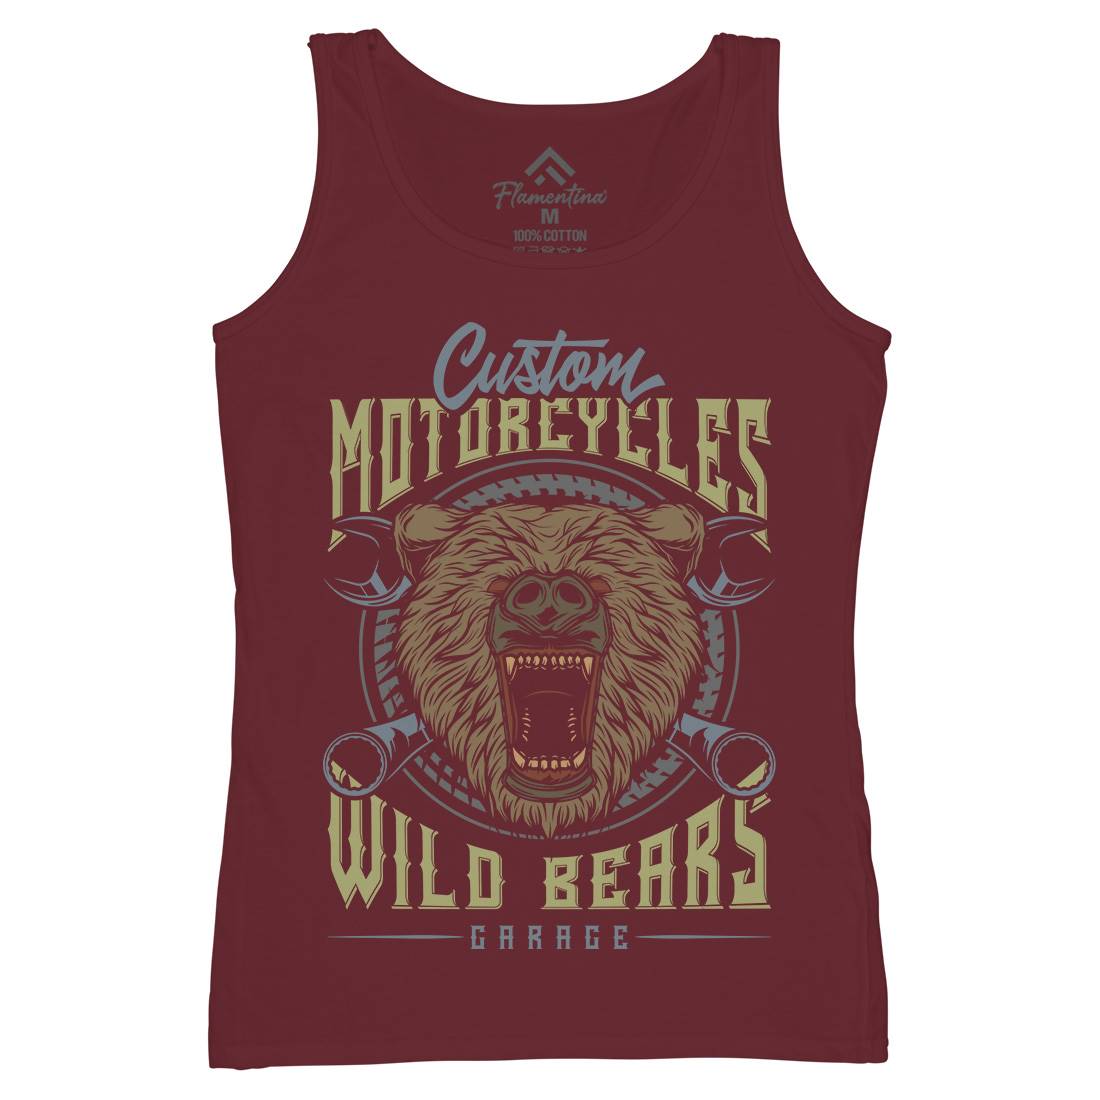 Wild Bears Womens Organic Tank Top Vest Motorcycles B788